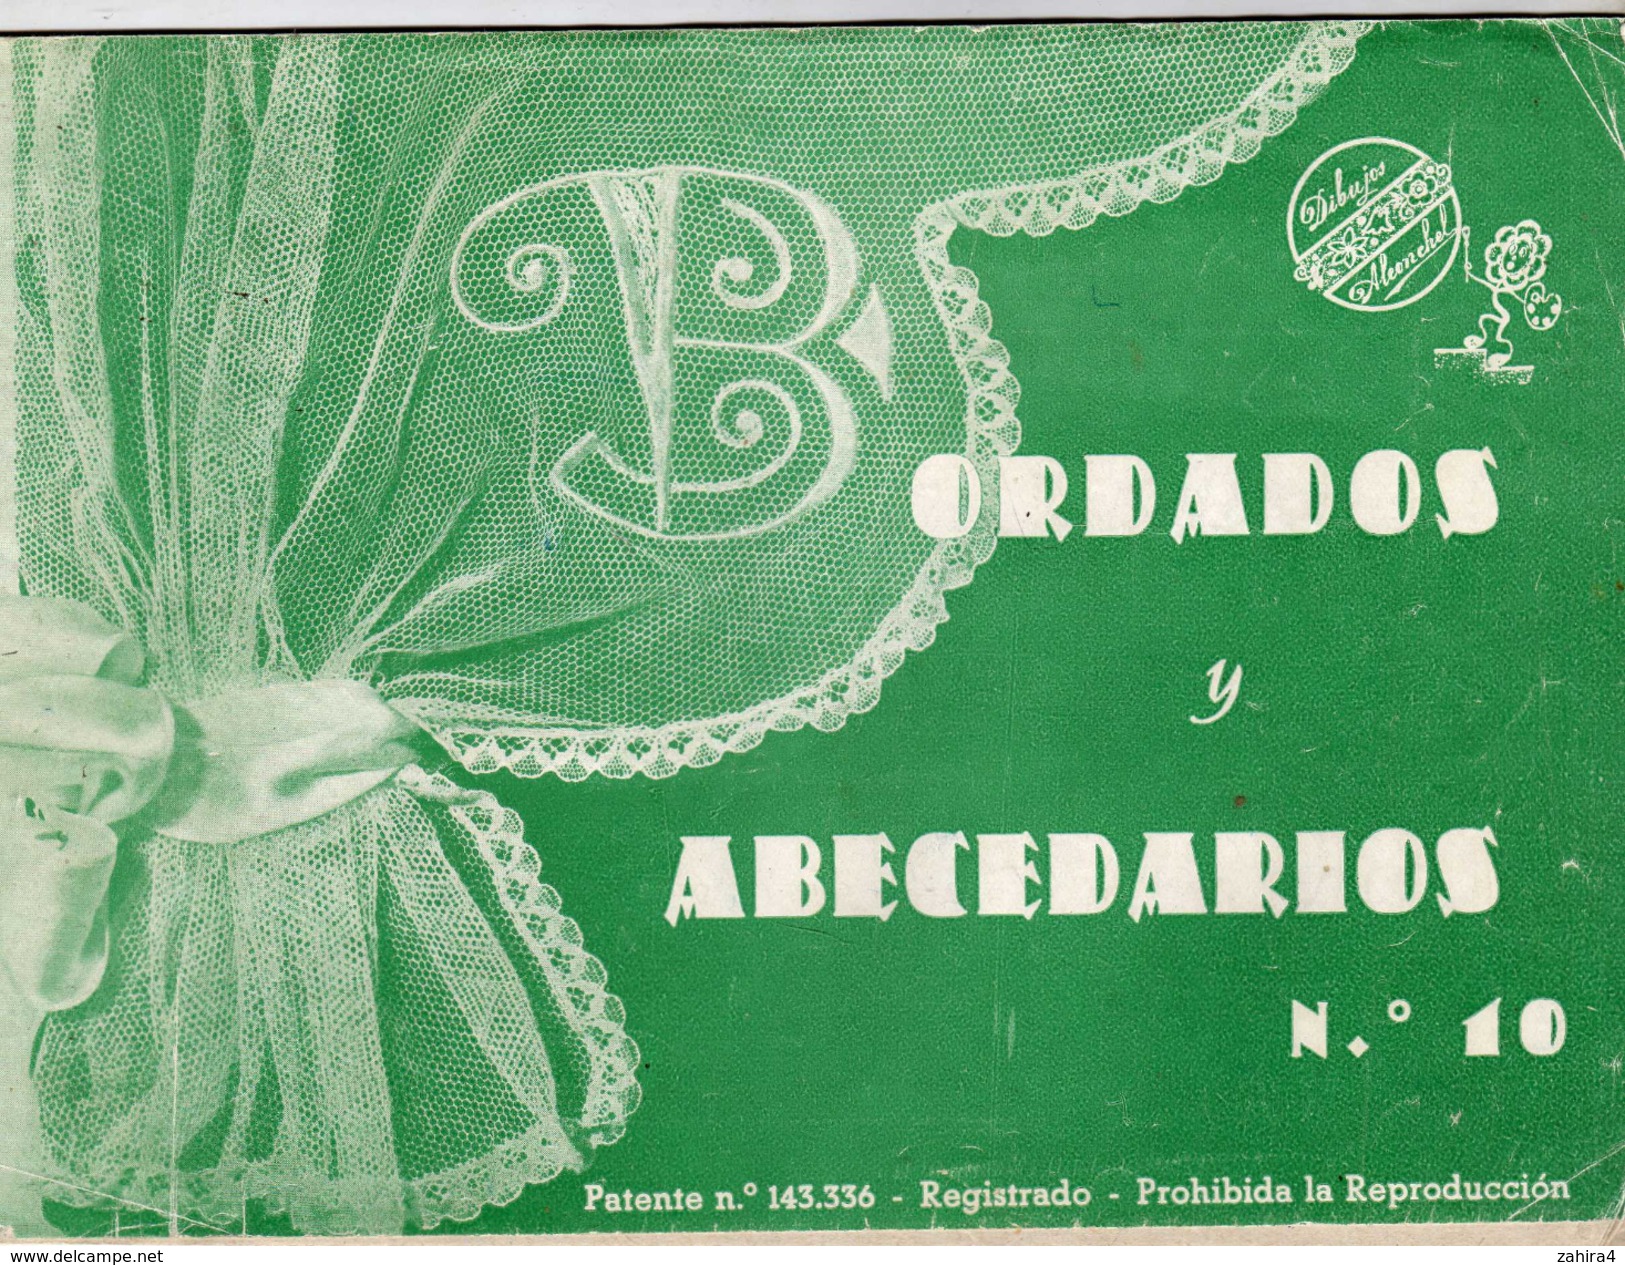 Diburos Aleonchel - Bordados Y Abecedaros N° 10 - Patente N° 143.336 - Valencia - Lifestyle